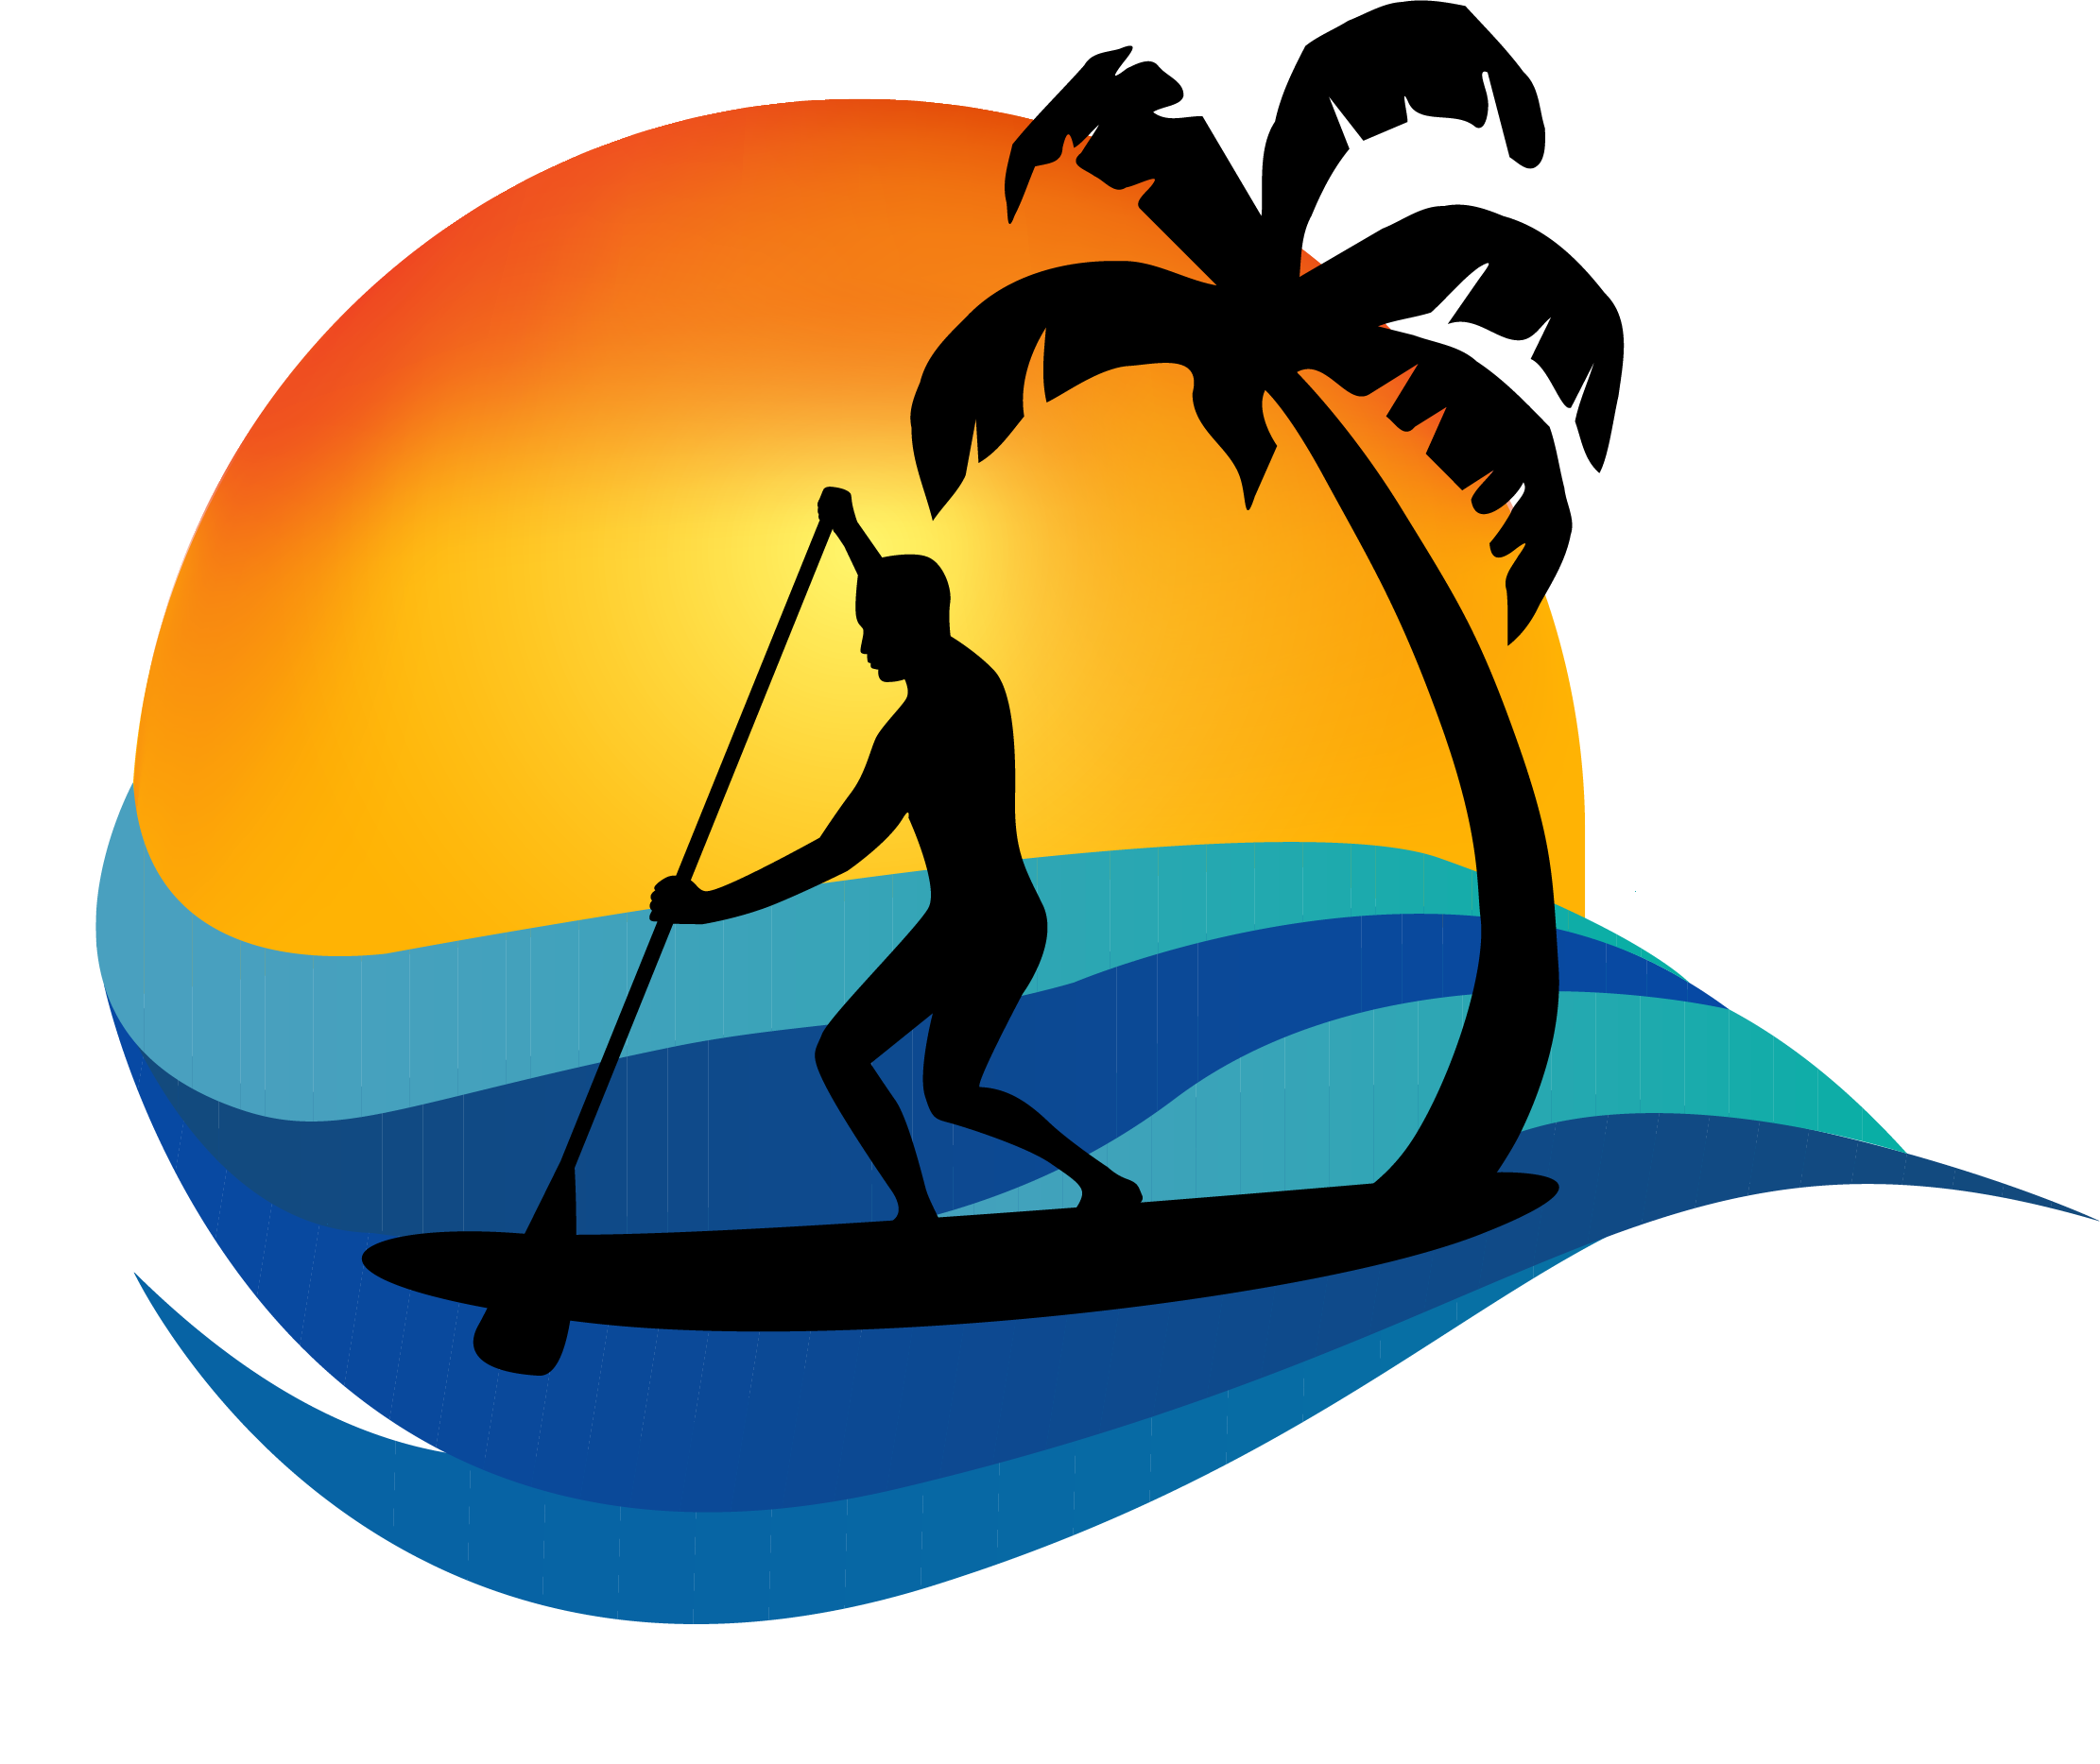 West palm beach johnny. Surfing clipart water sport